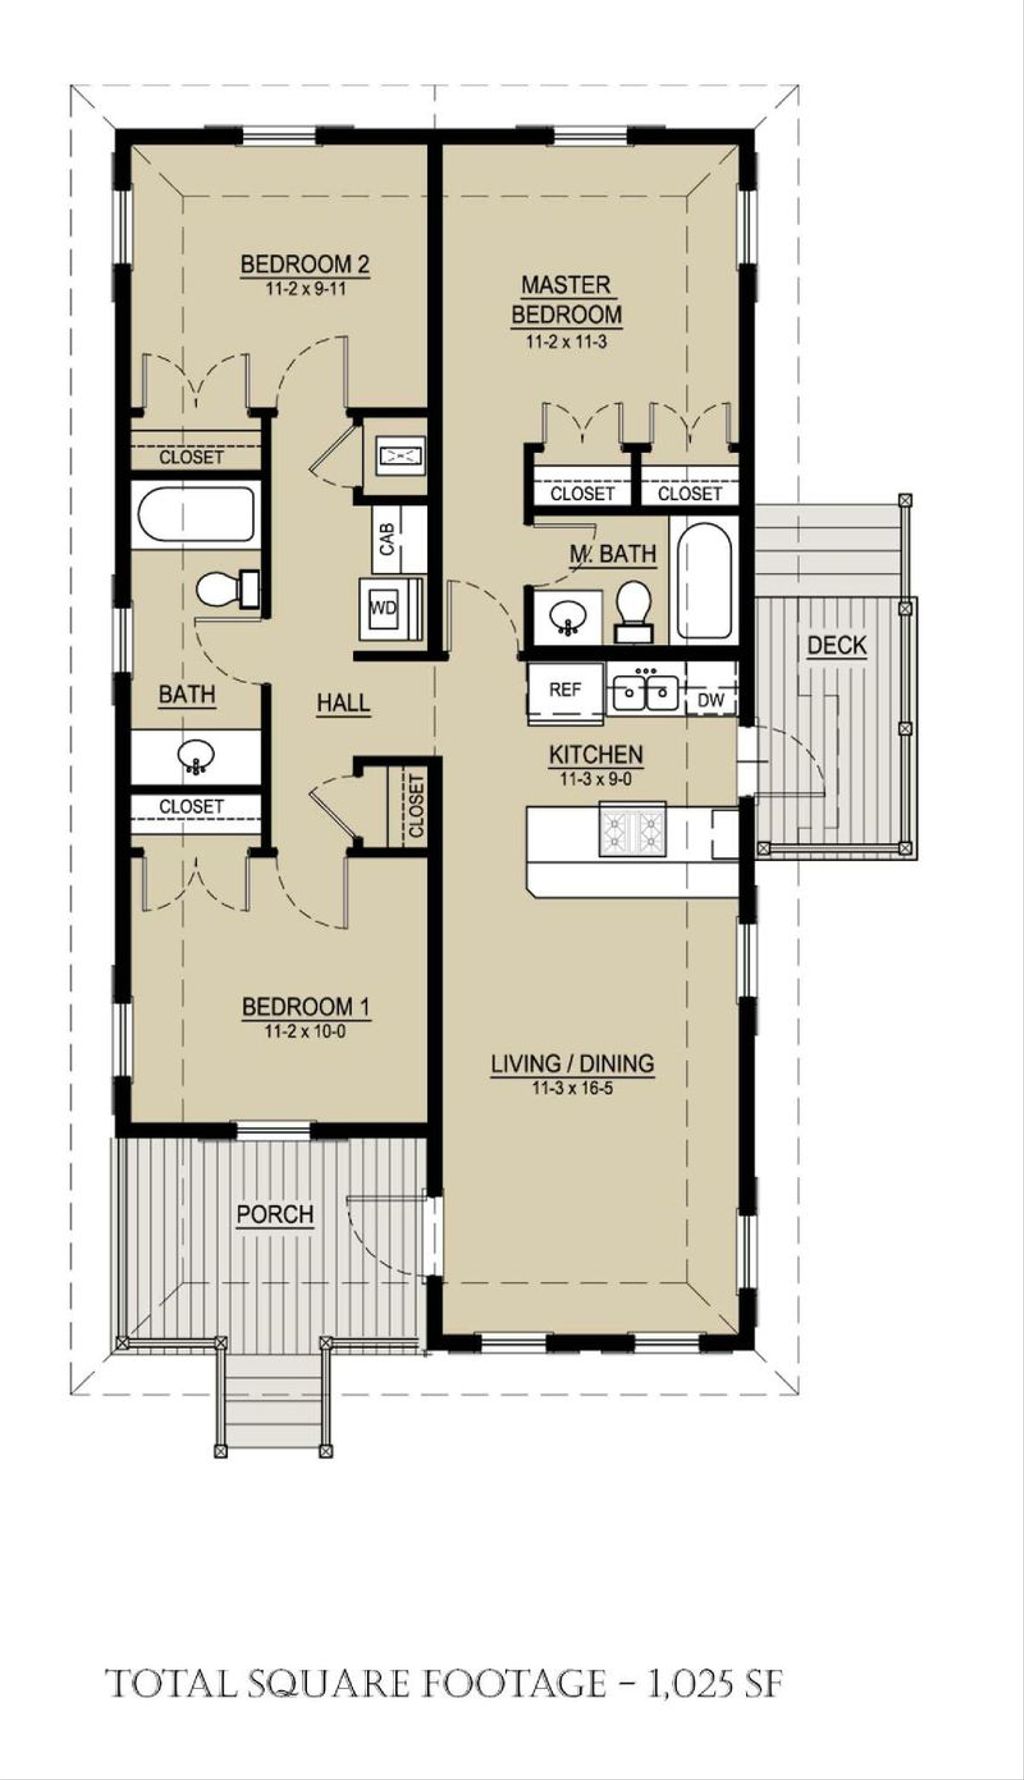 3 Bedroom Floorplans Plans We Love